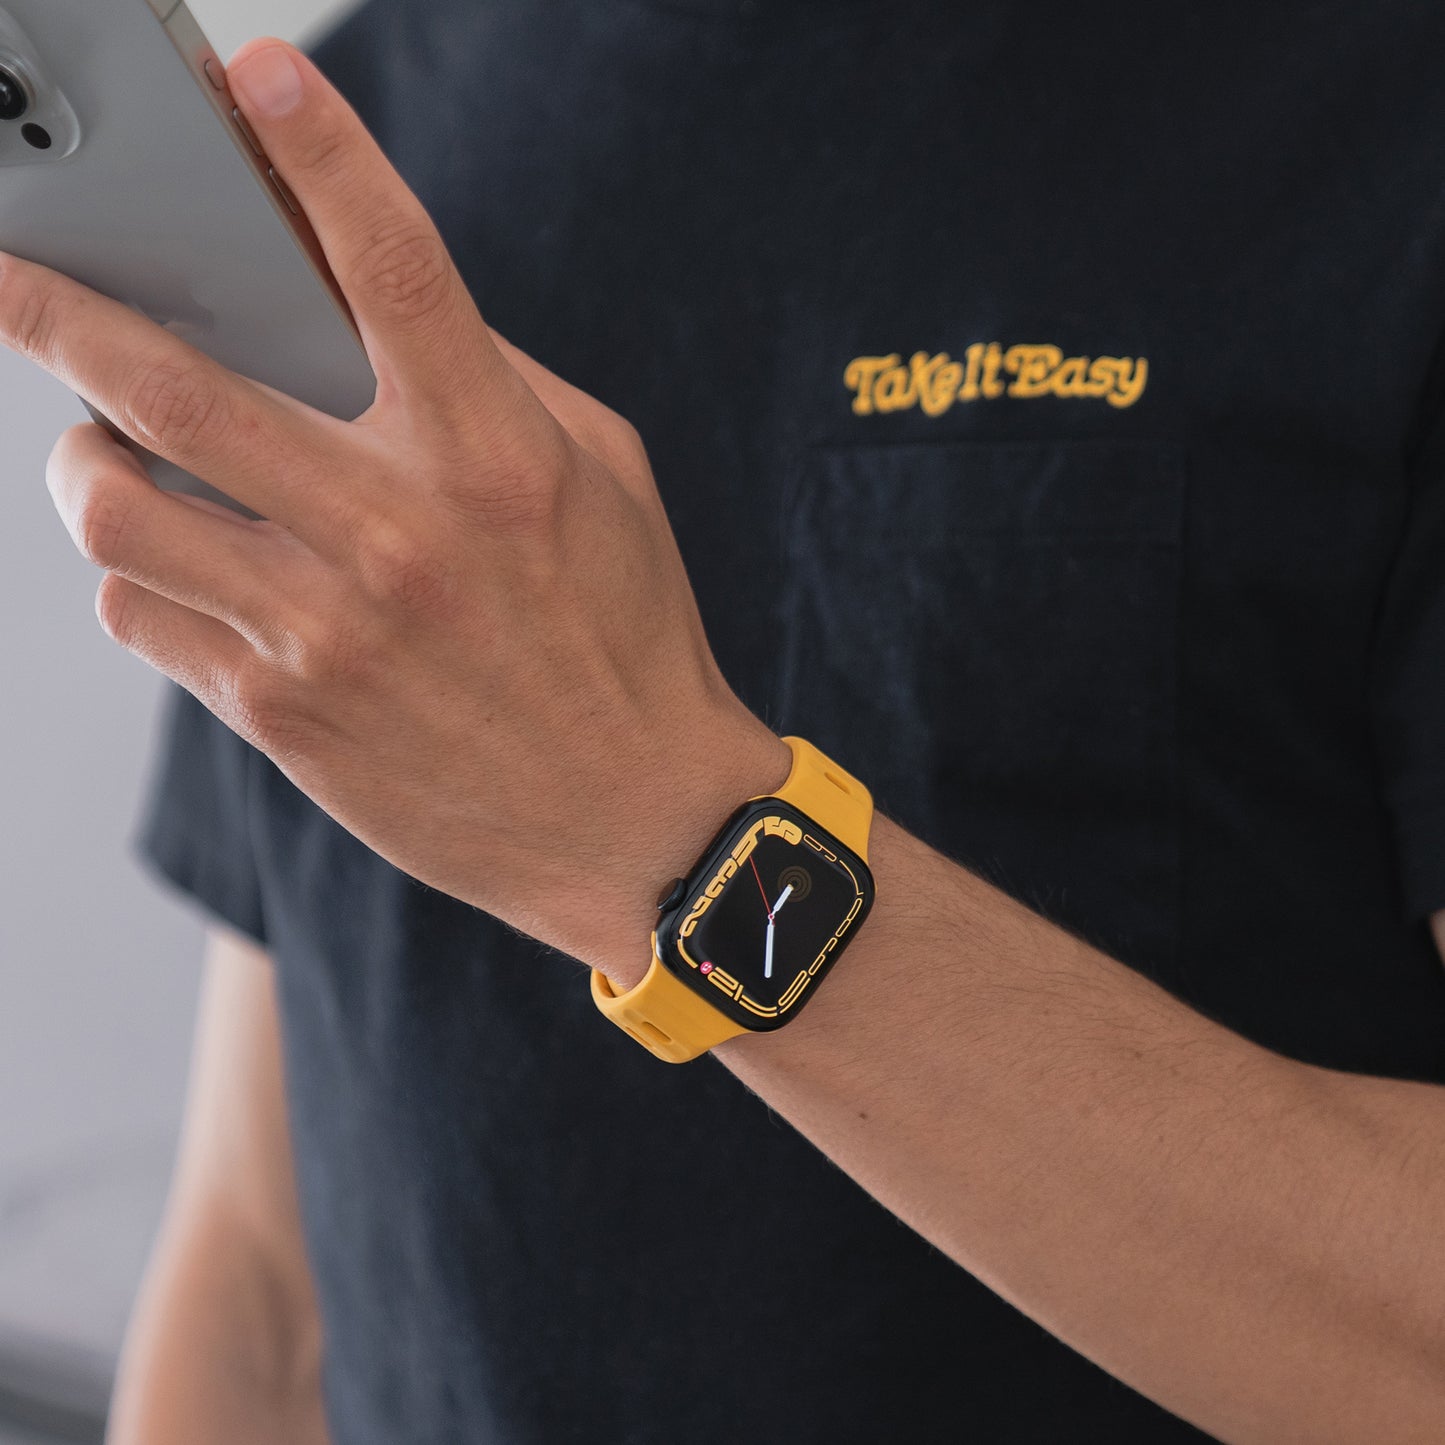 arktisband Apple Watch Silikonarmband "Active"